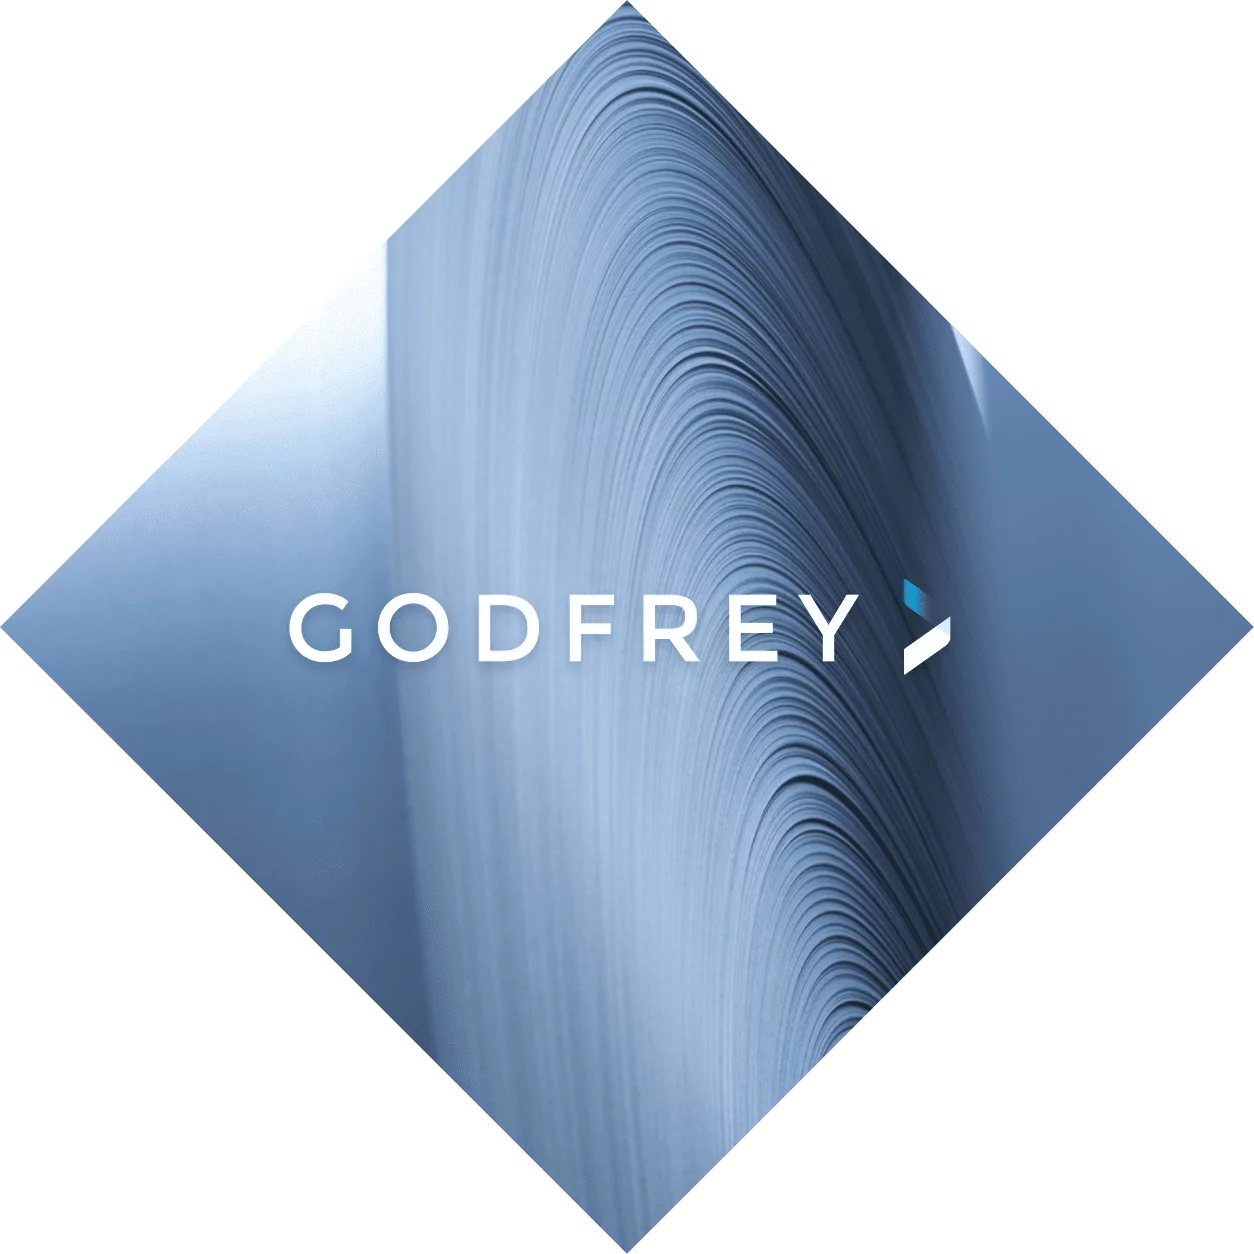 Godfrey logo on background texture